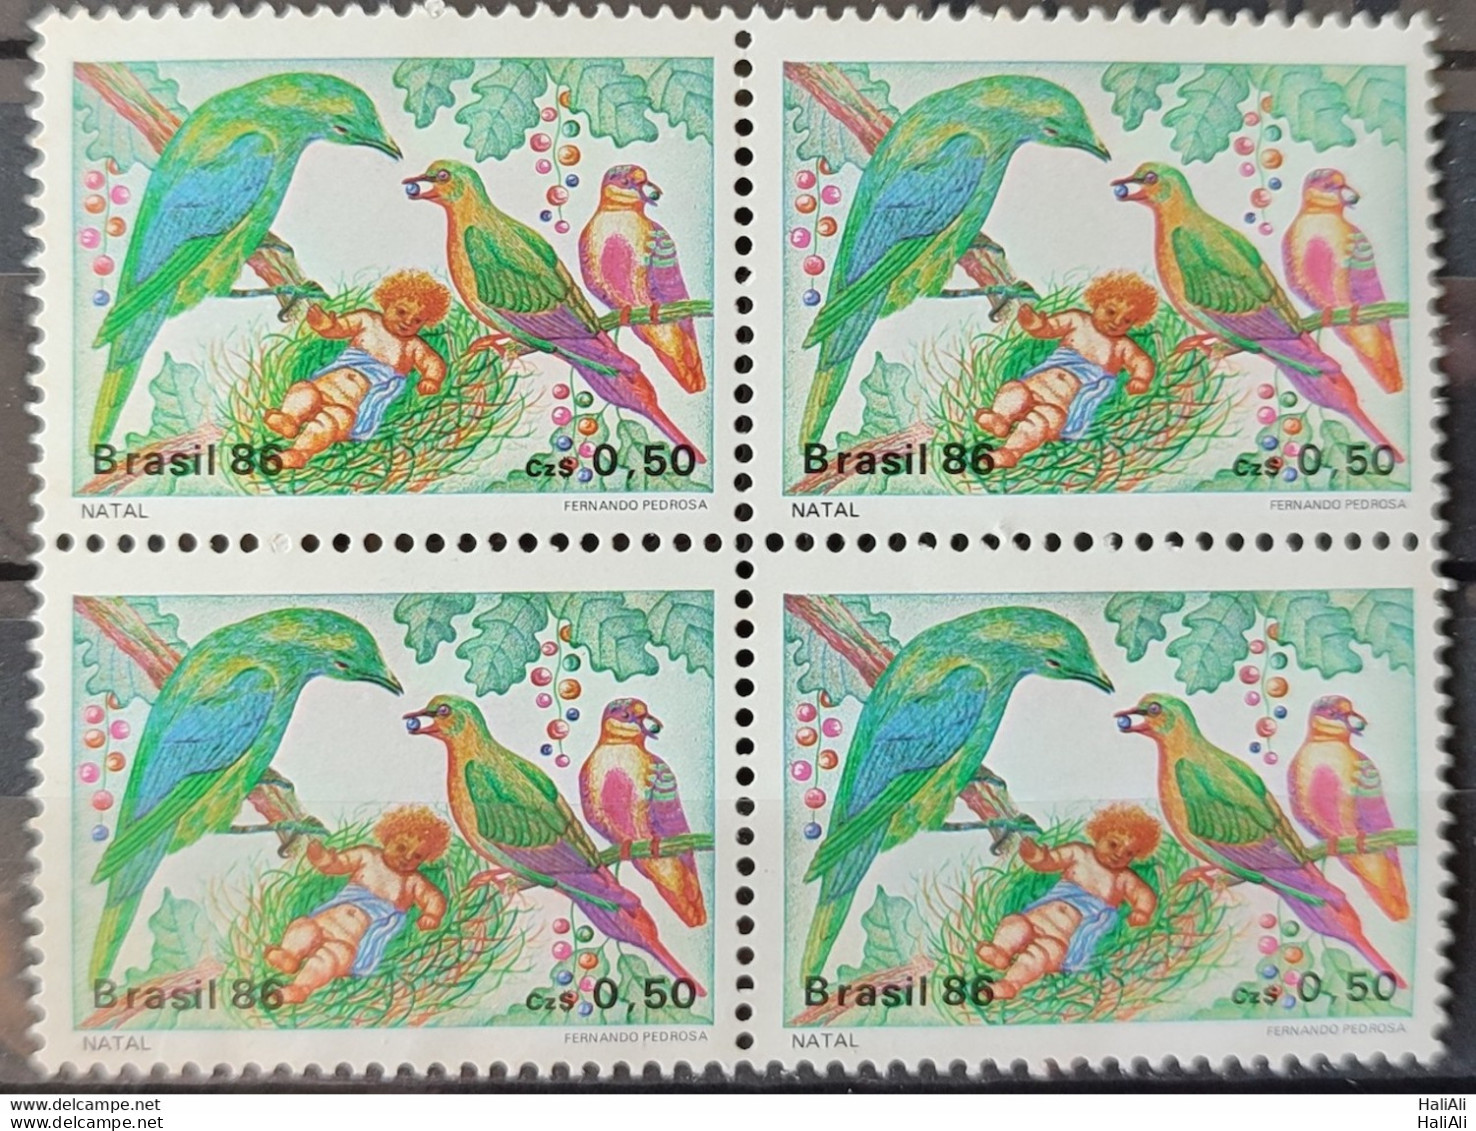 C 1530 Brazil Stamp Christmas Religion Birds 1986 Block Of 4.jpg - Unused Stamps